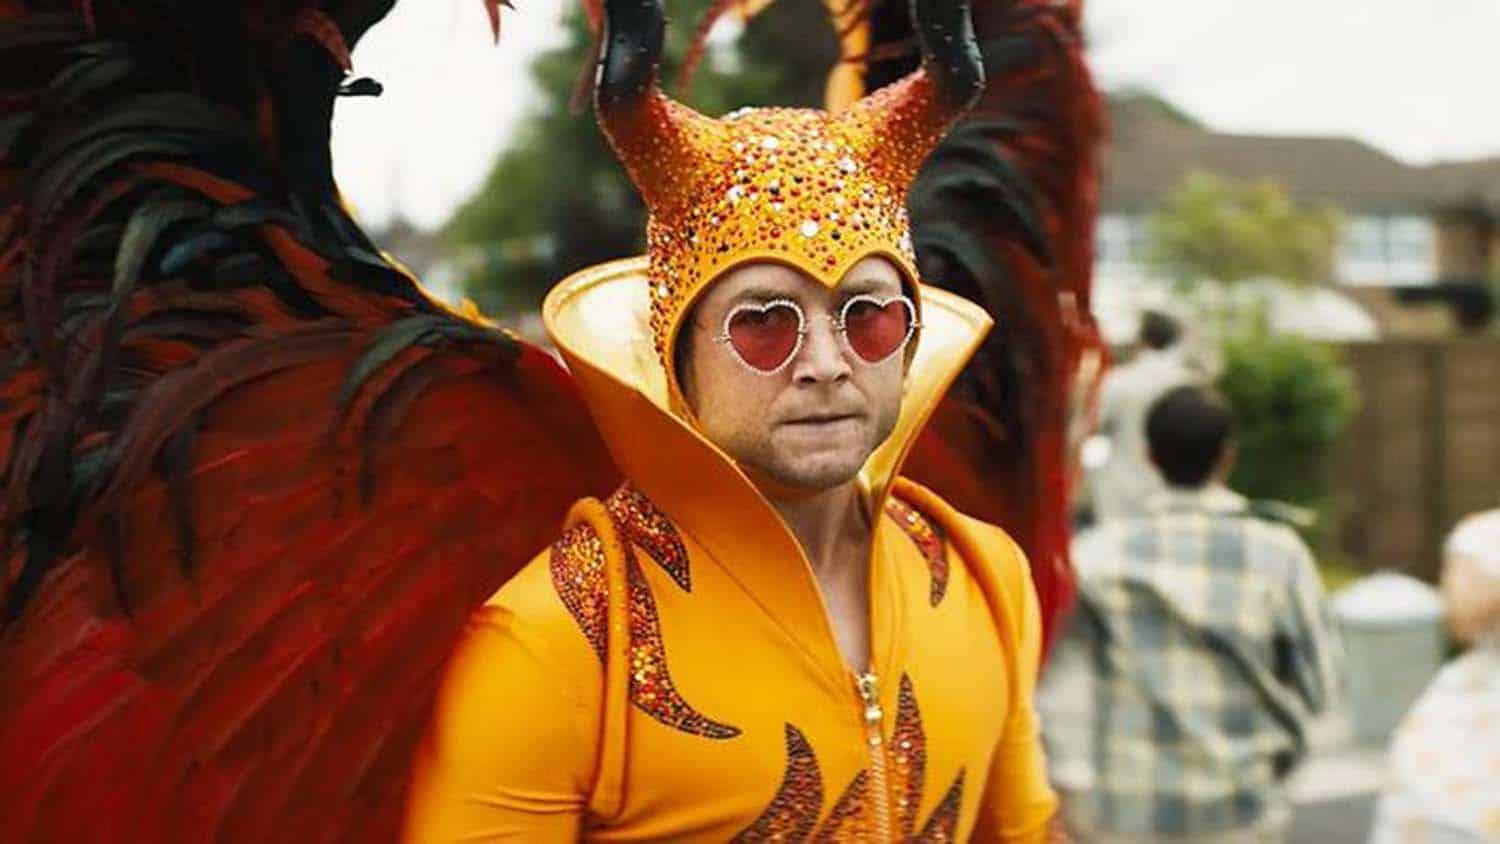 Taron Egerton como Elton John em cena do filme Rocketman